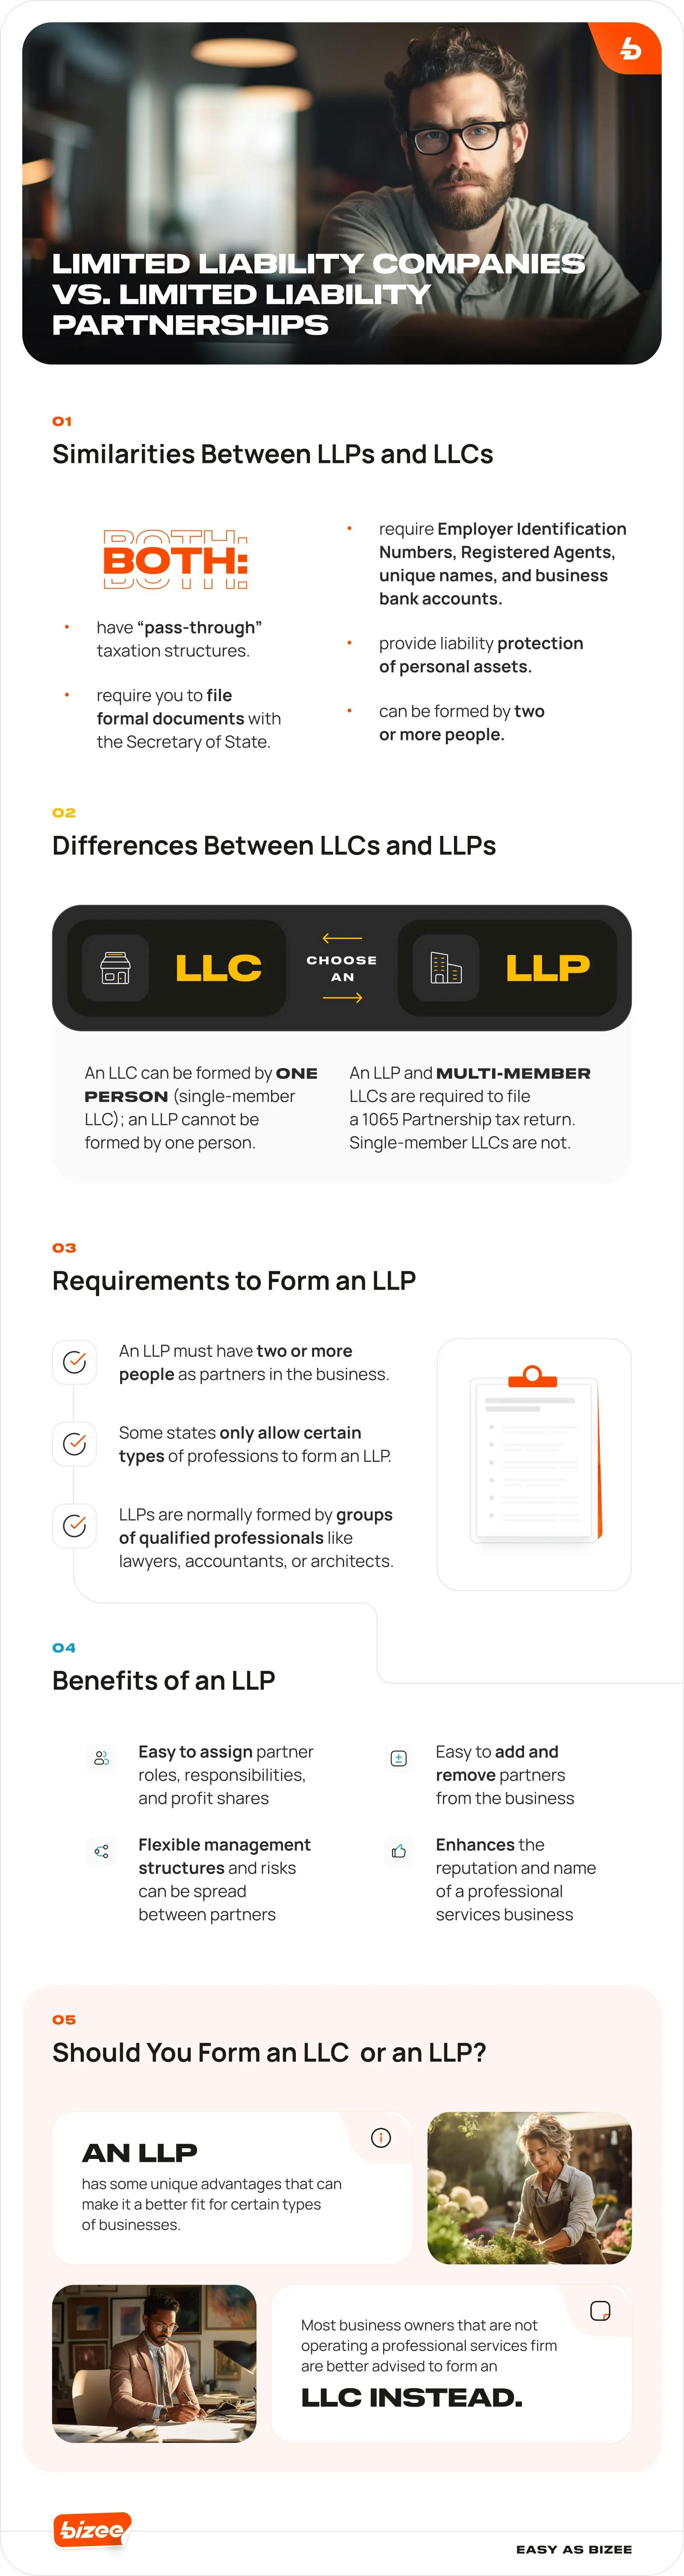 Limited Liability Companies vs. Limited Liability Partnerships